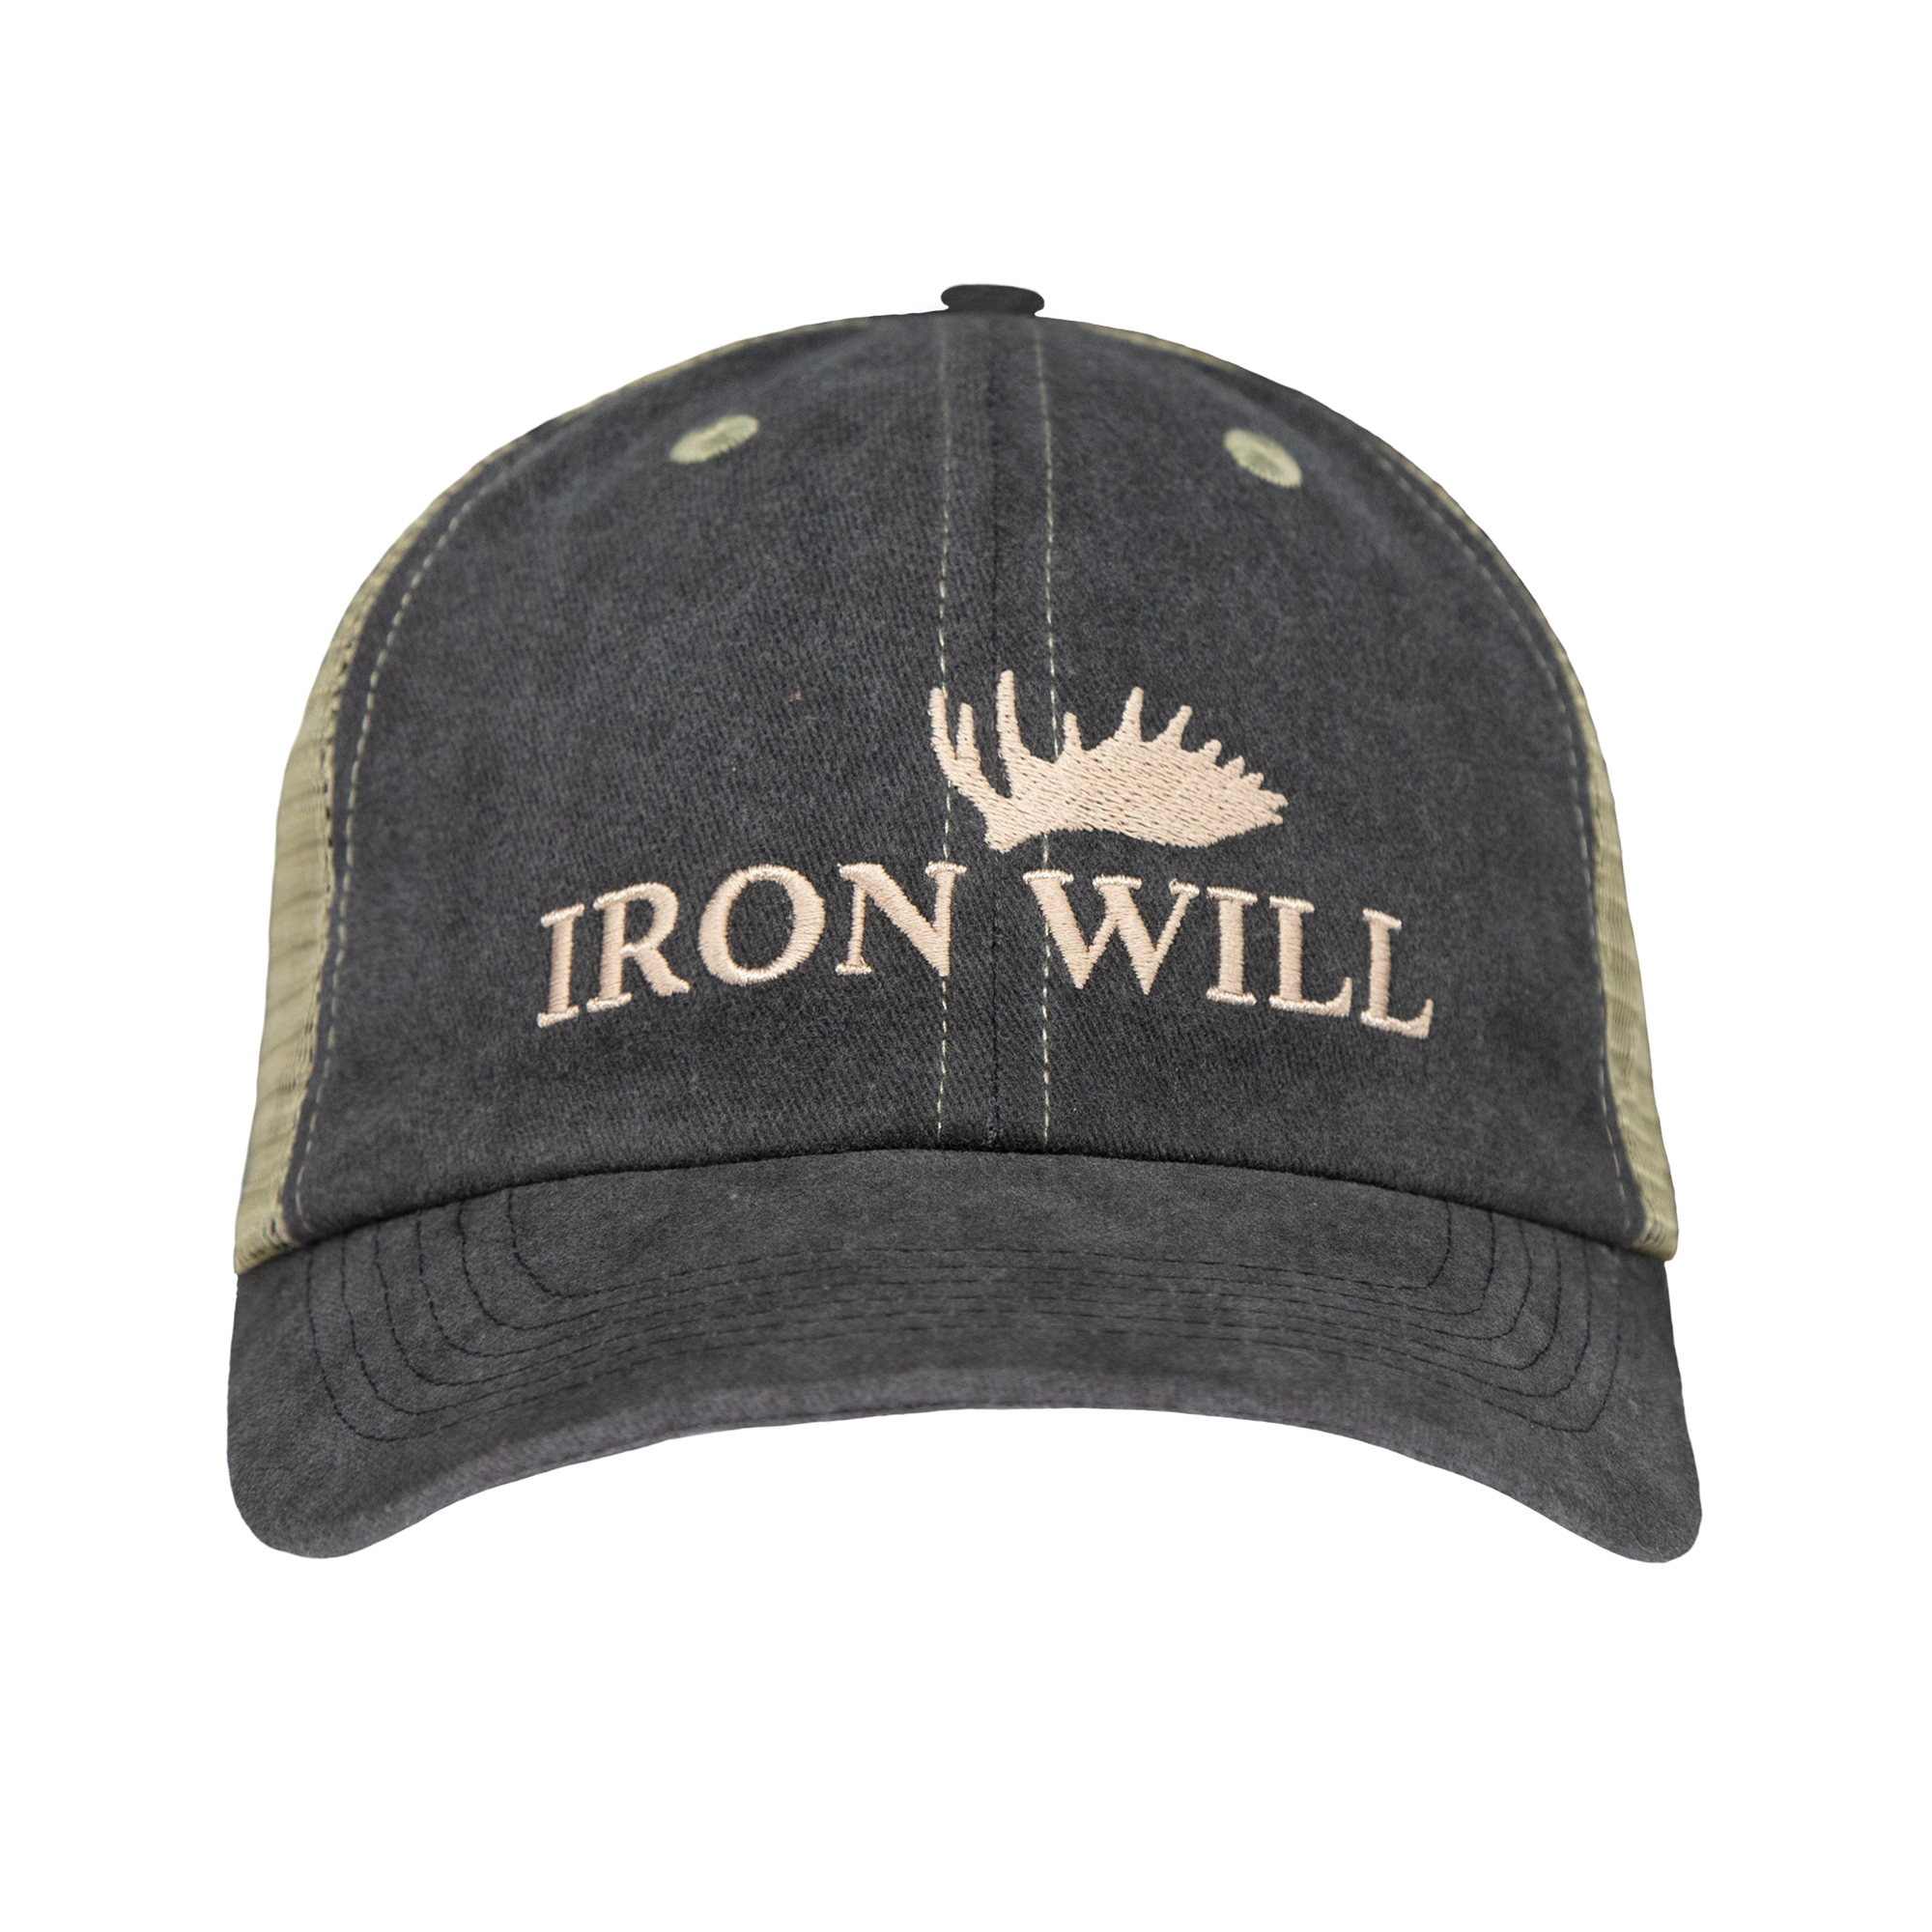 Iron Will logo hat 